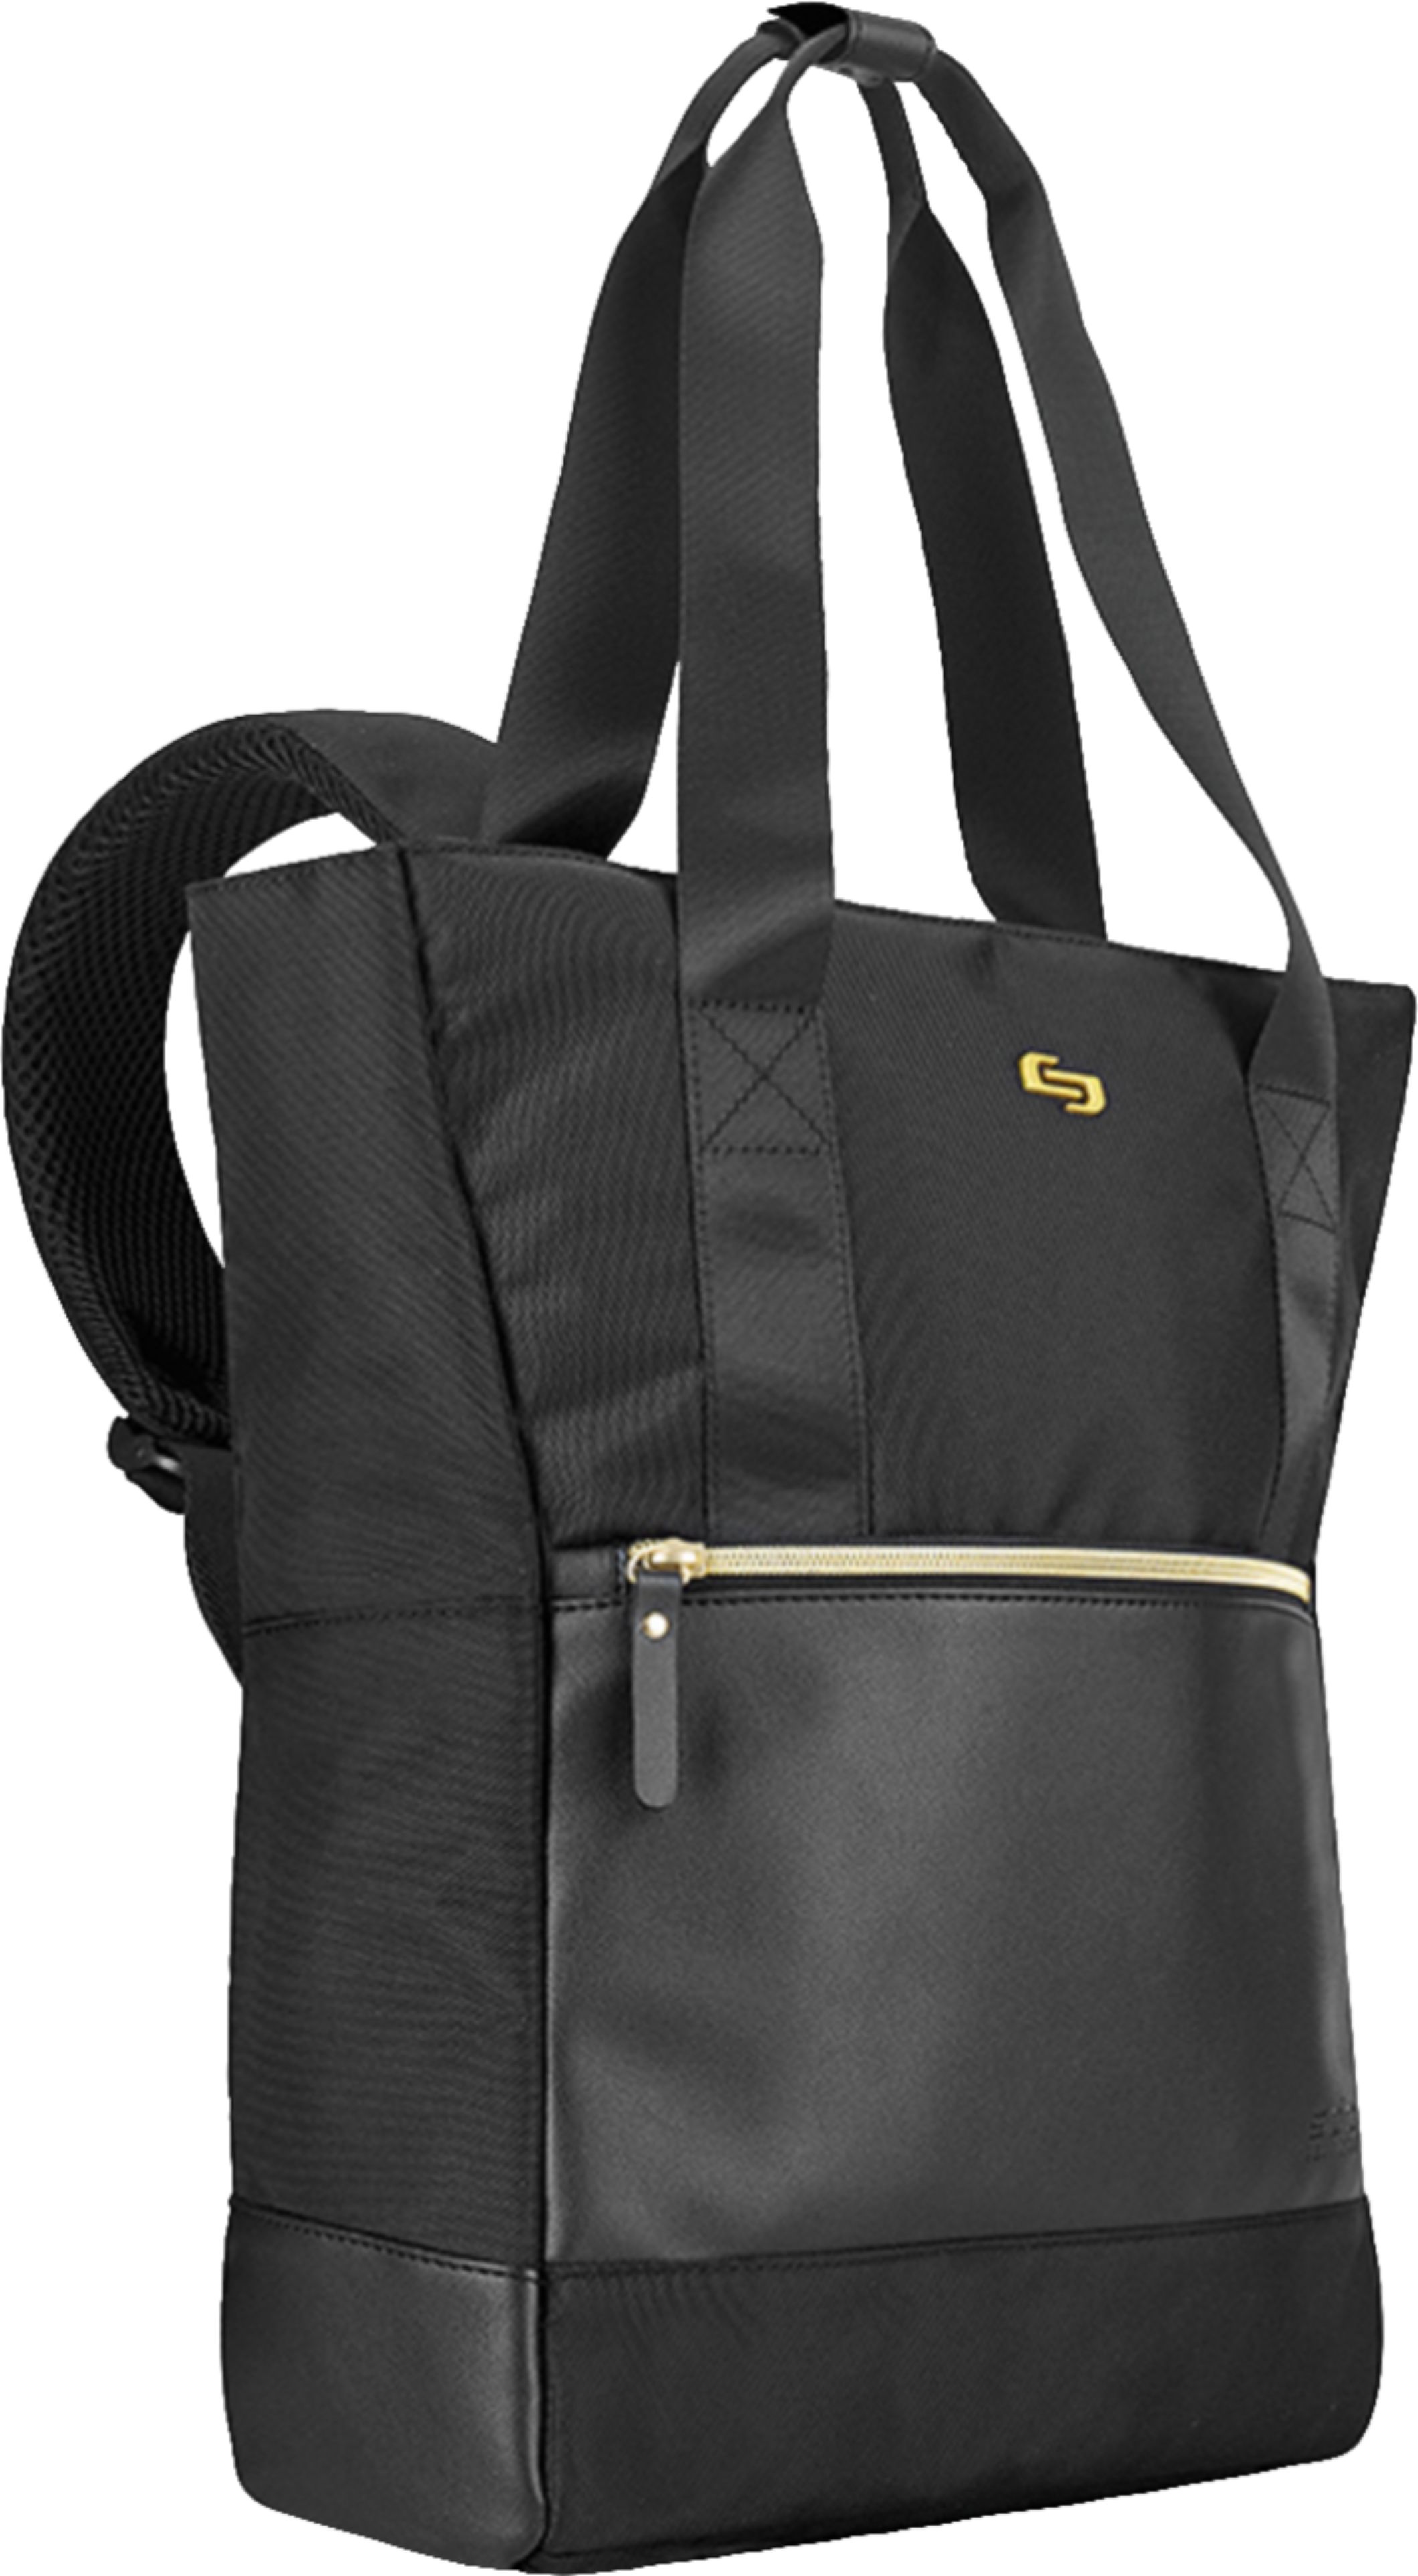 Angle View: Swissdigital Design - Katy Rose Backpack - Black and Rose Gold